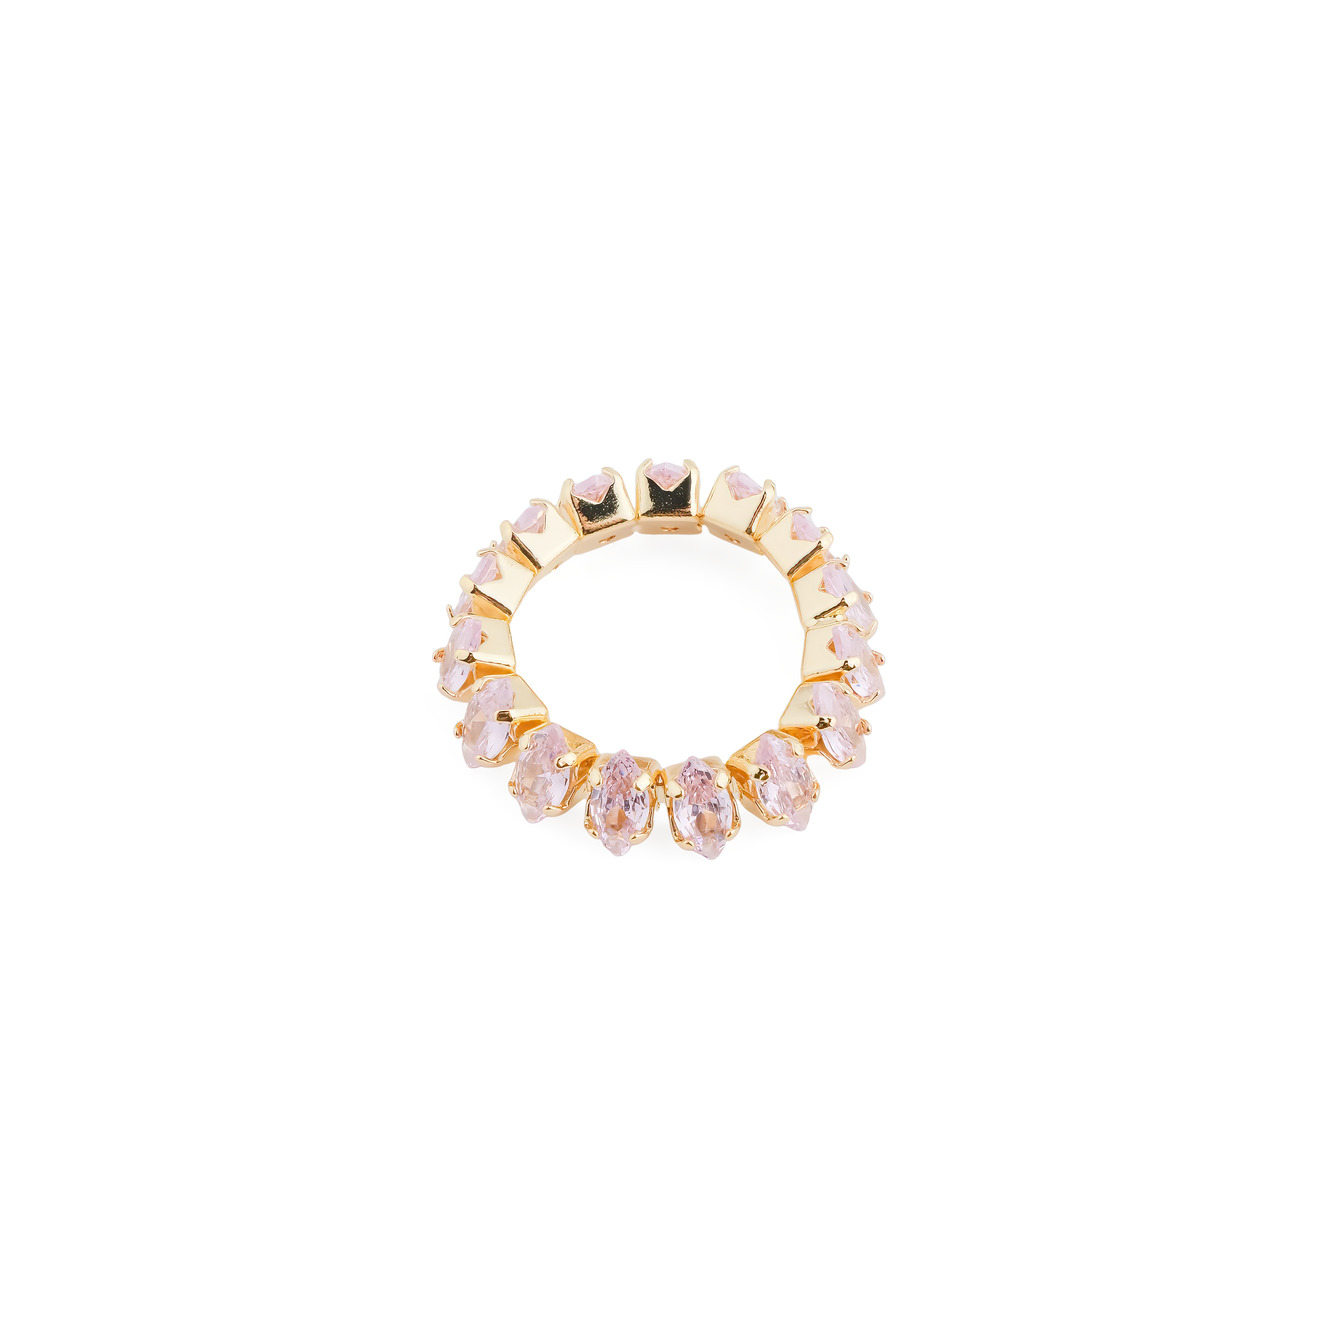 Herald Percy Кольцо с розовыми кристаллами herald percy кольцо с золотистыми кристаллами